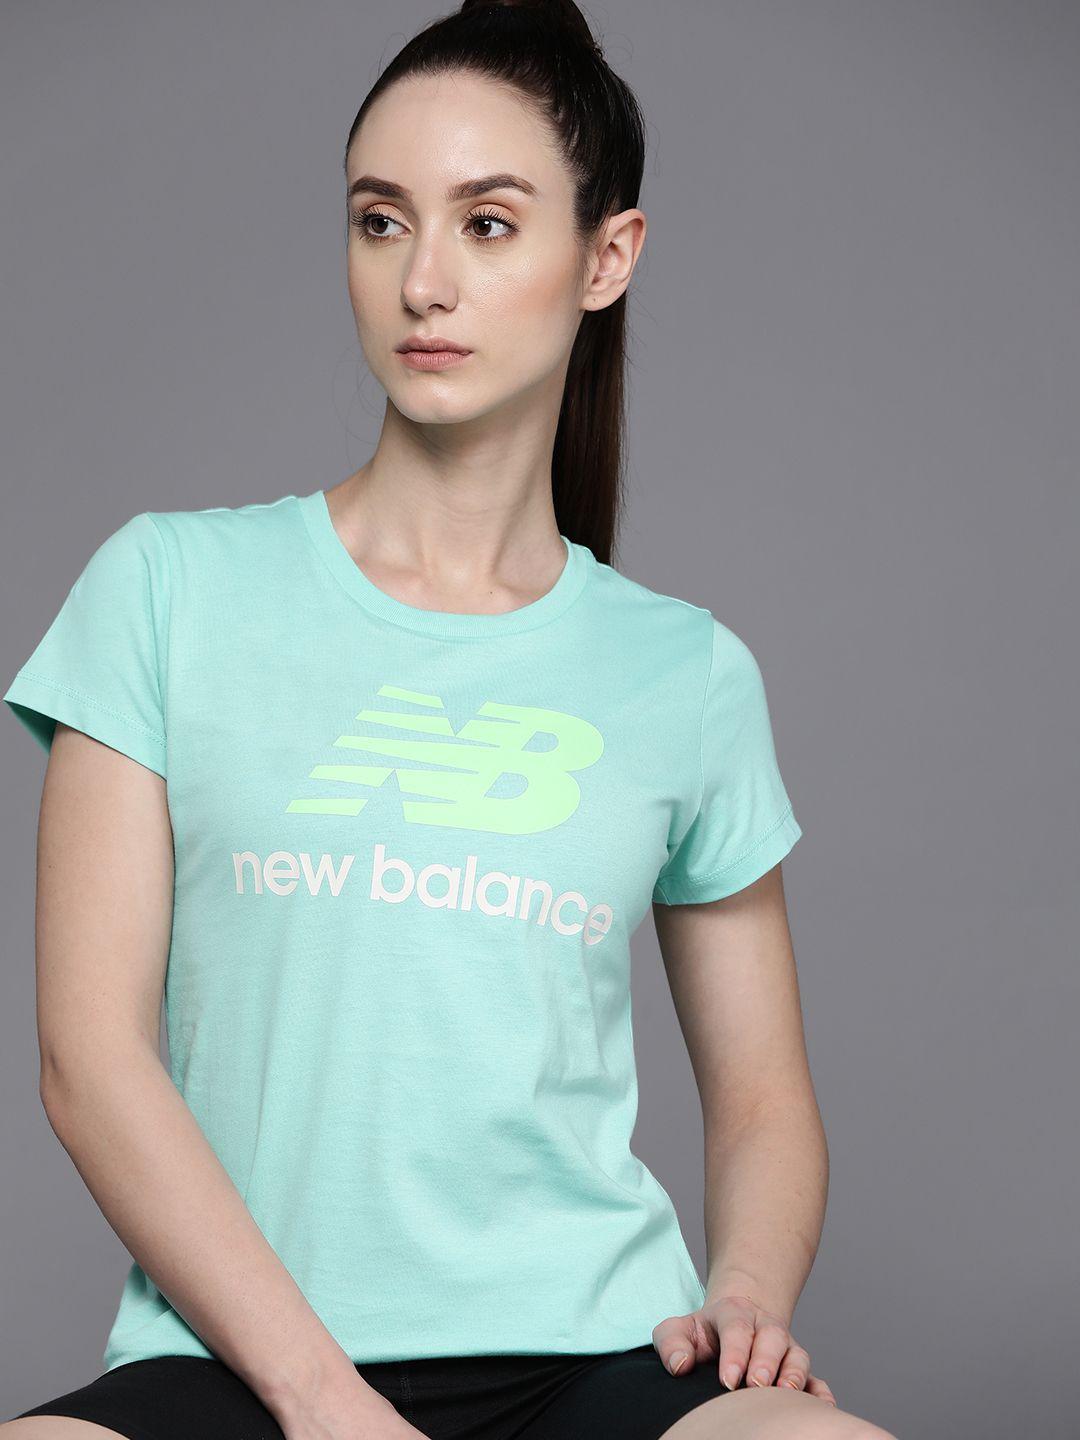 new balance women brand logo printed pure cotton t-shirt